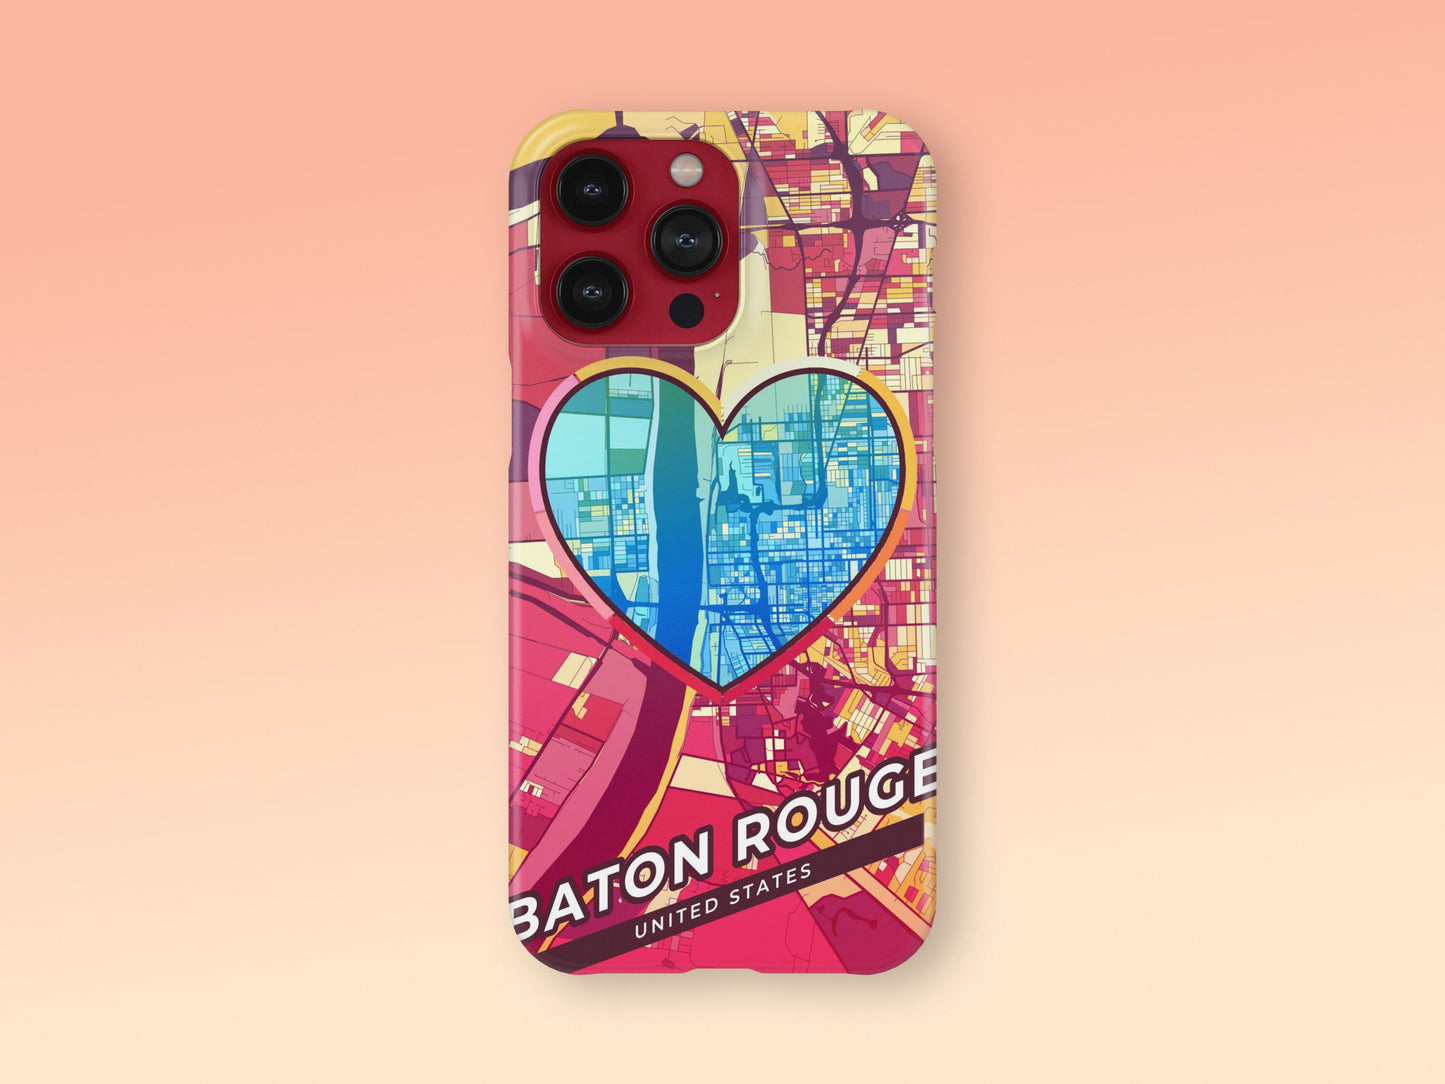 Baton Rouge Louisiana slim phone case with colorful icon. Birthday, wedding or housewarming gift. Couple match cases. 2